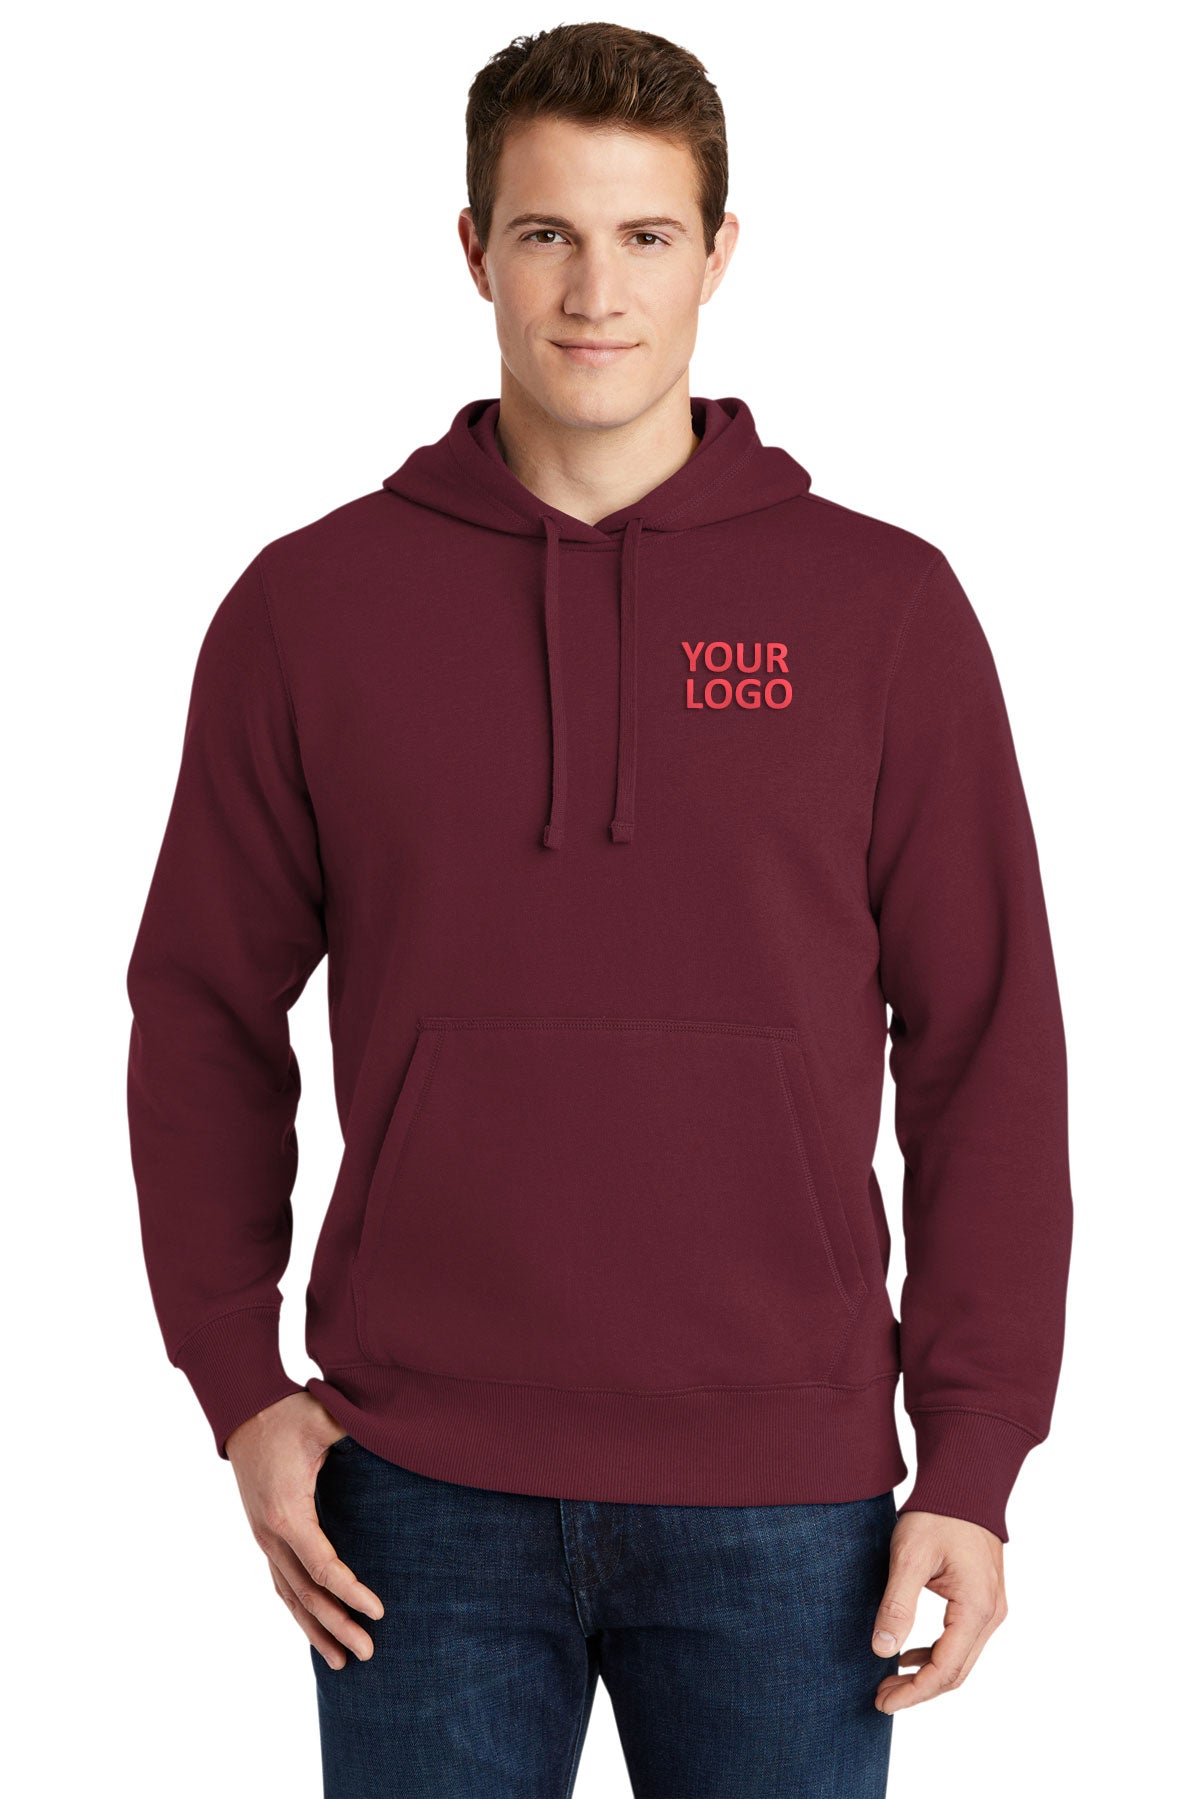 Sport-Tek Pullover Customized Hooded Sweatshirts, Maroon